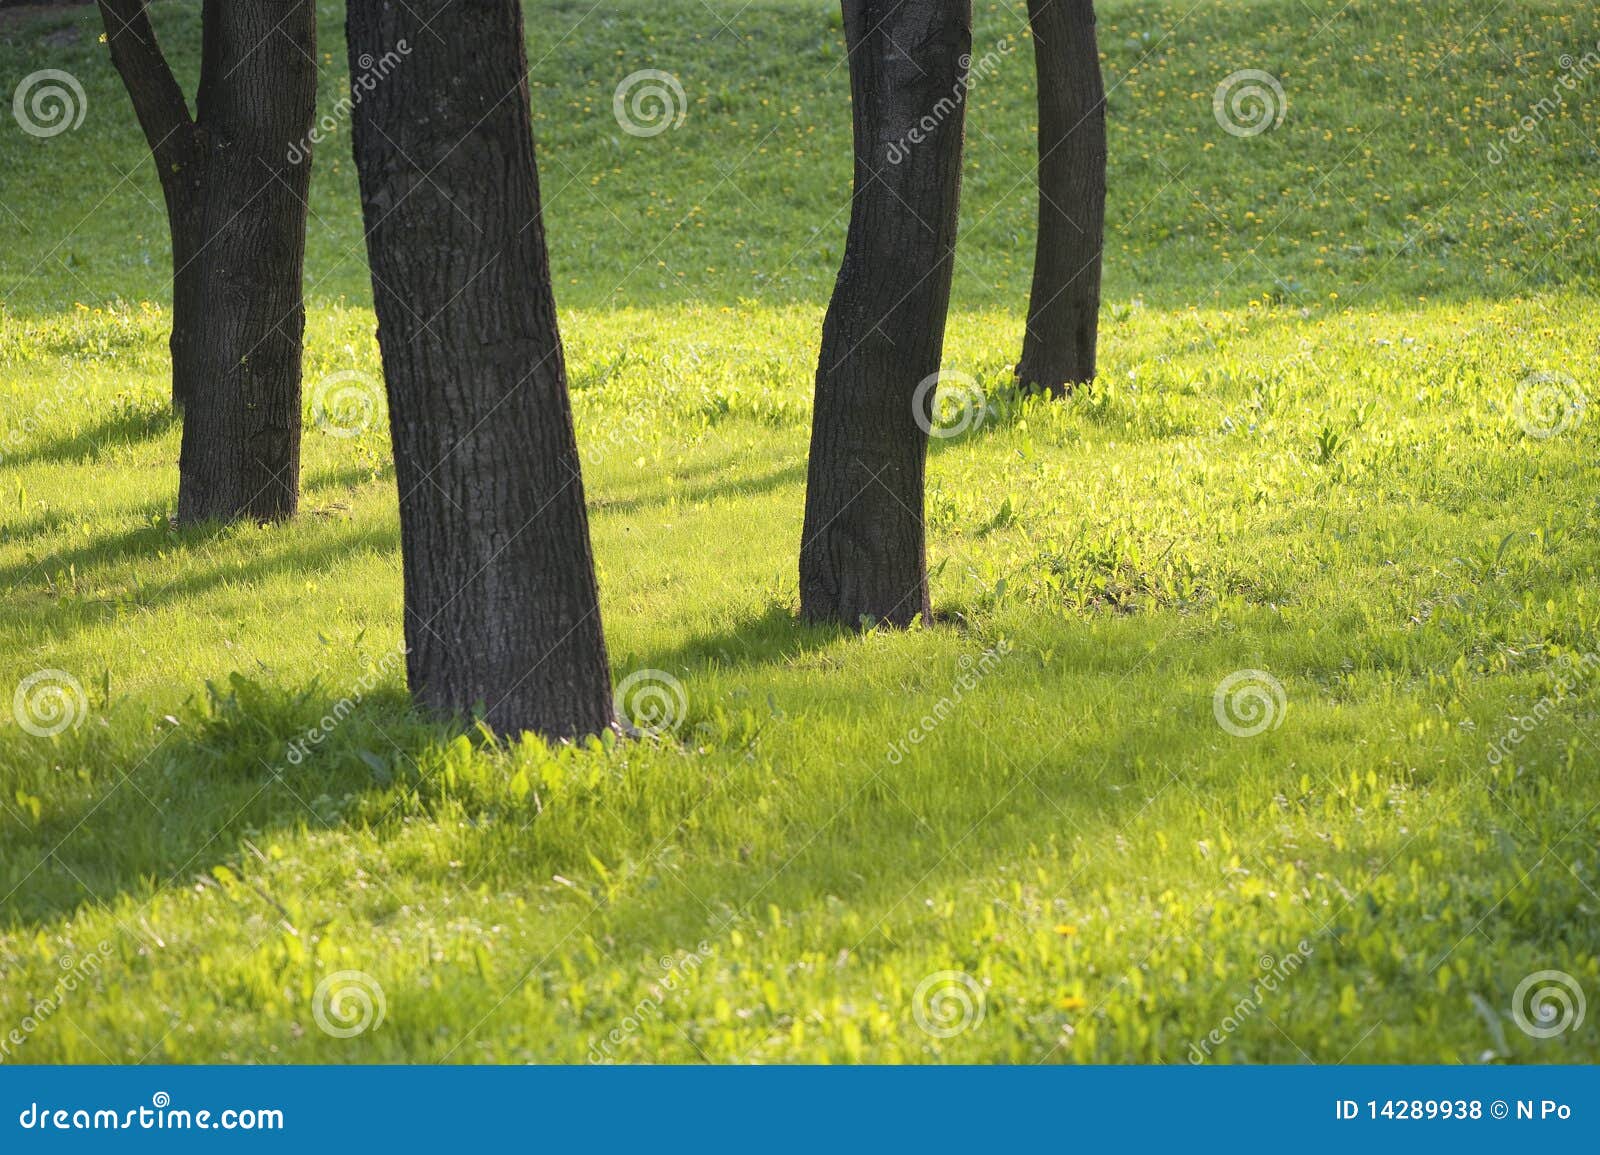 dark trunks of trees on spring greens